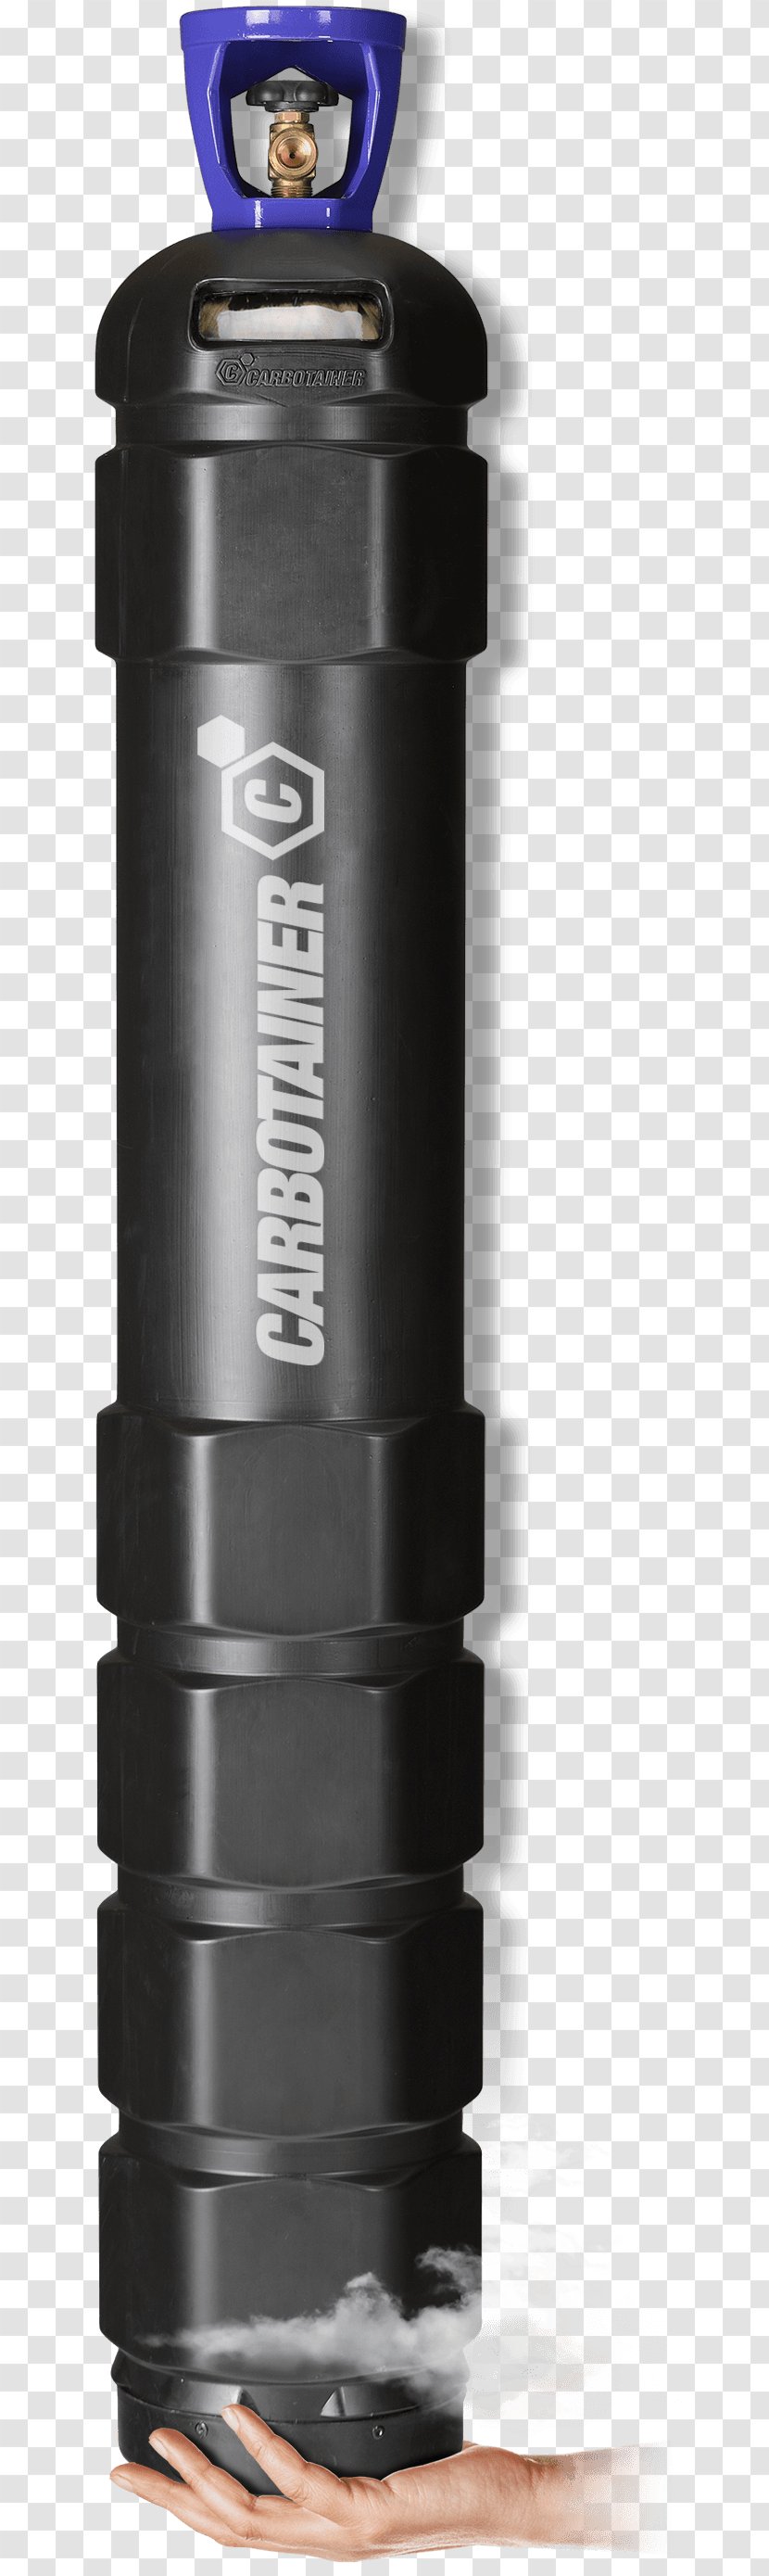 Gas Bottle Carbon Fibers Cylinder Air Transparent PNG